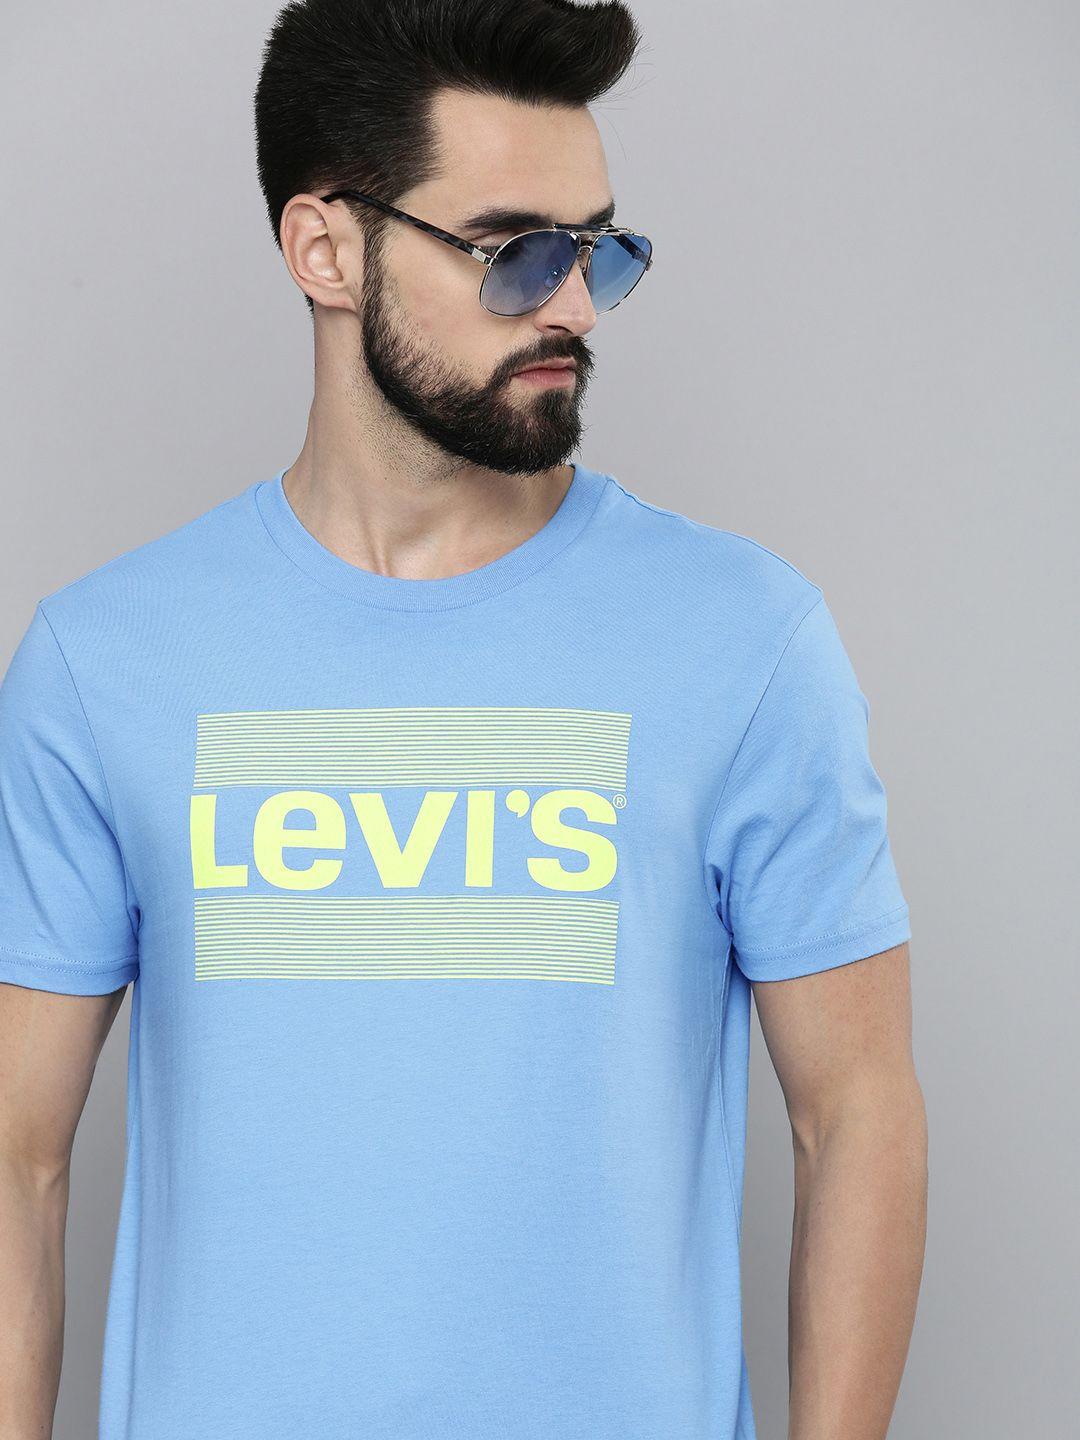 levis men blue & white brand logo printed pure cotton casual t-shirt